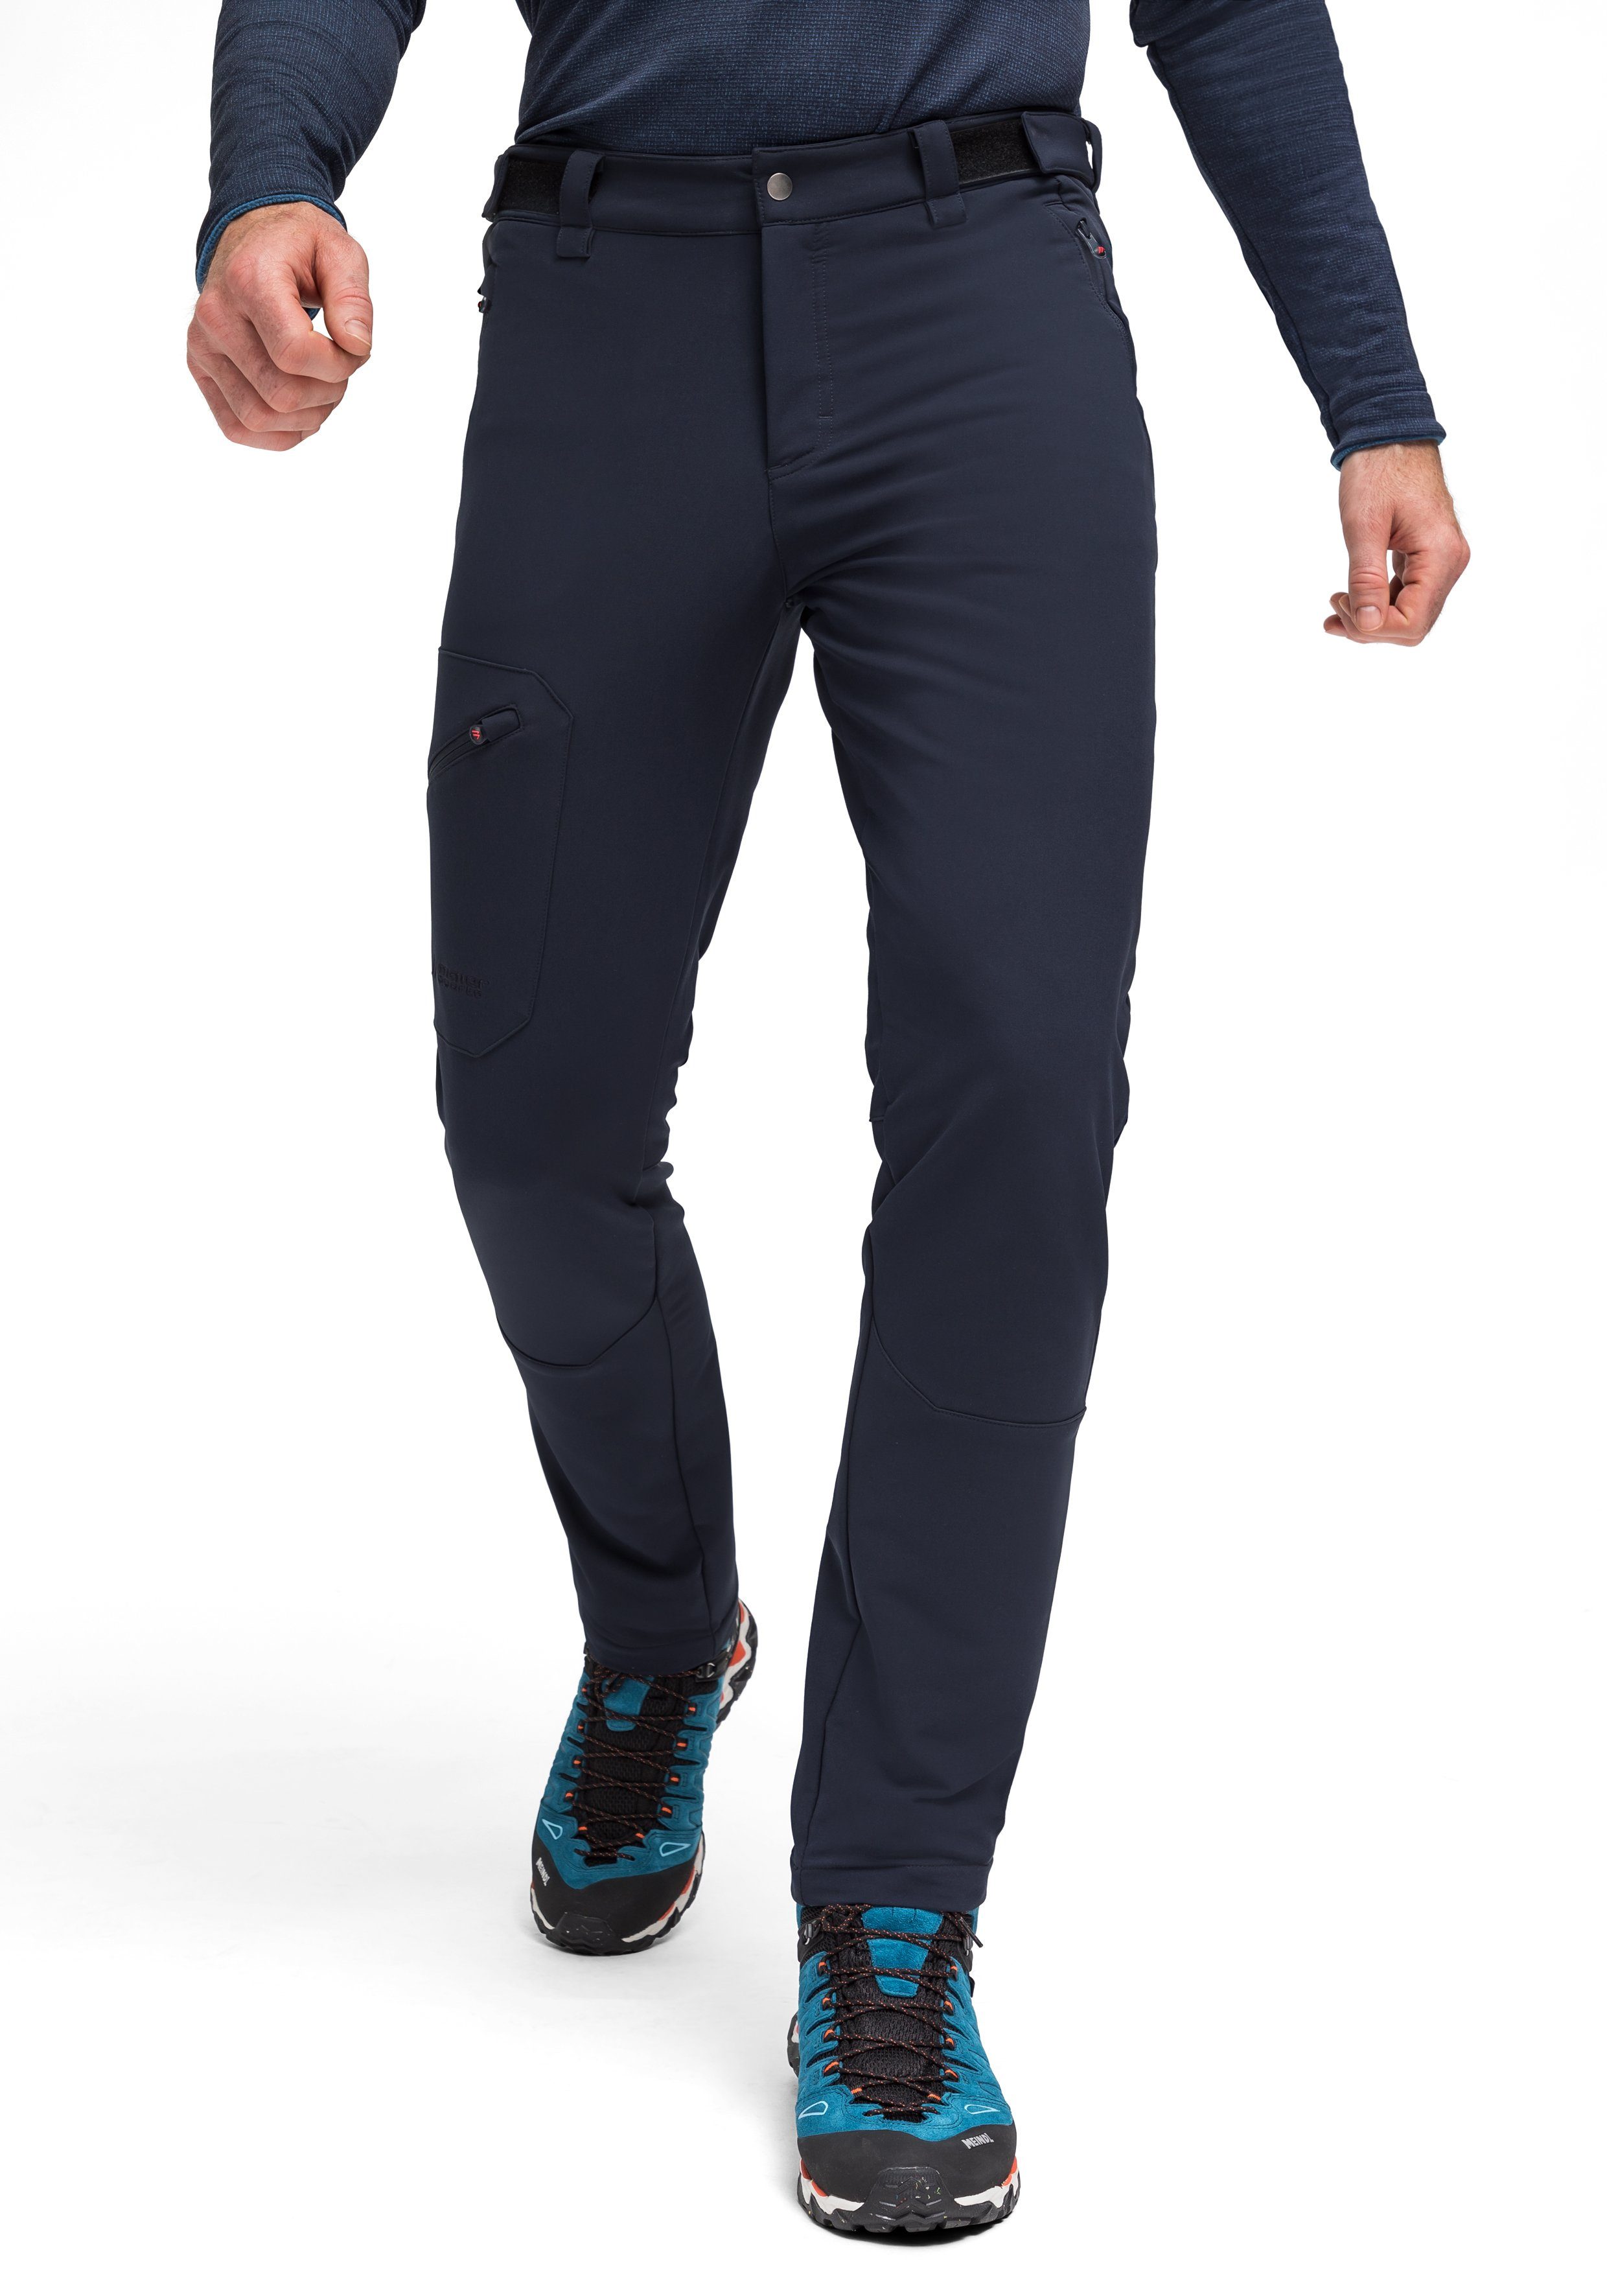 Sports elastische Funktionshose Outdoorhose dunkelblau cleanen Warme, M Maier im Look Foidit modernen